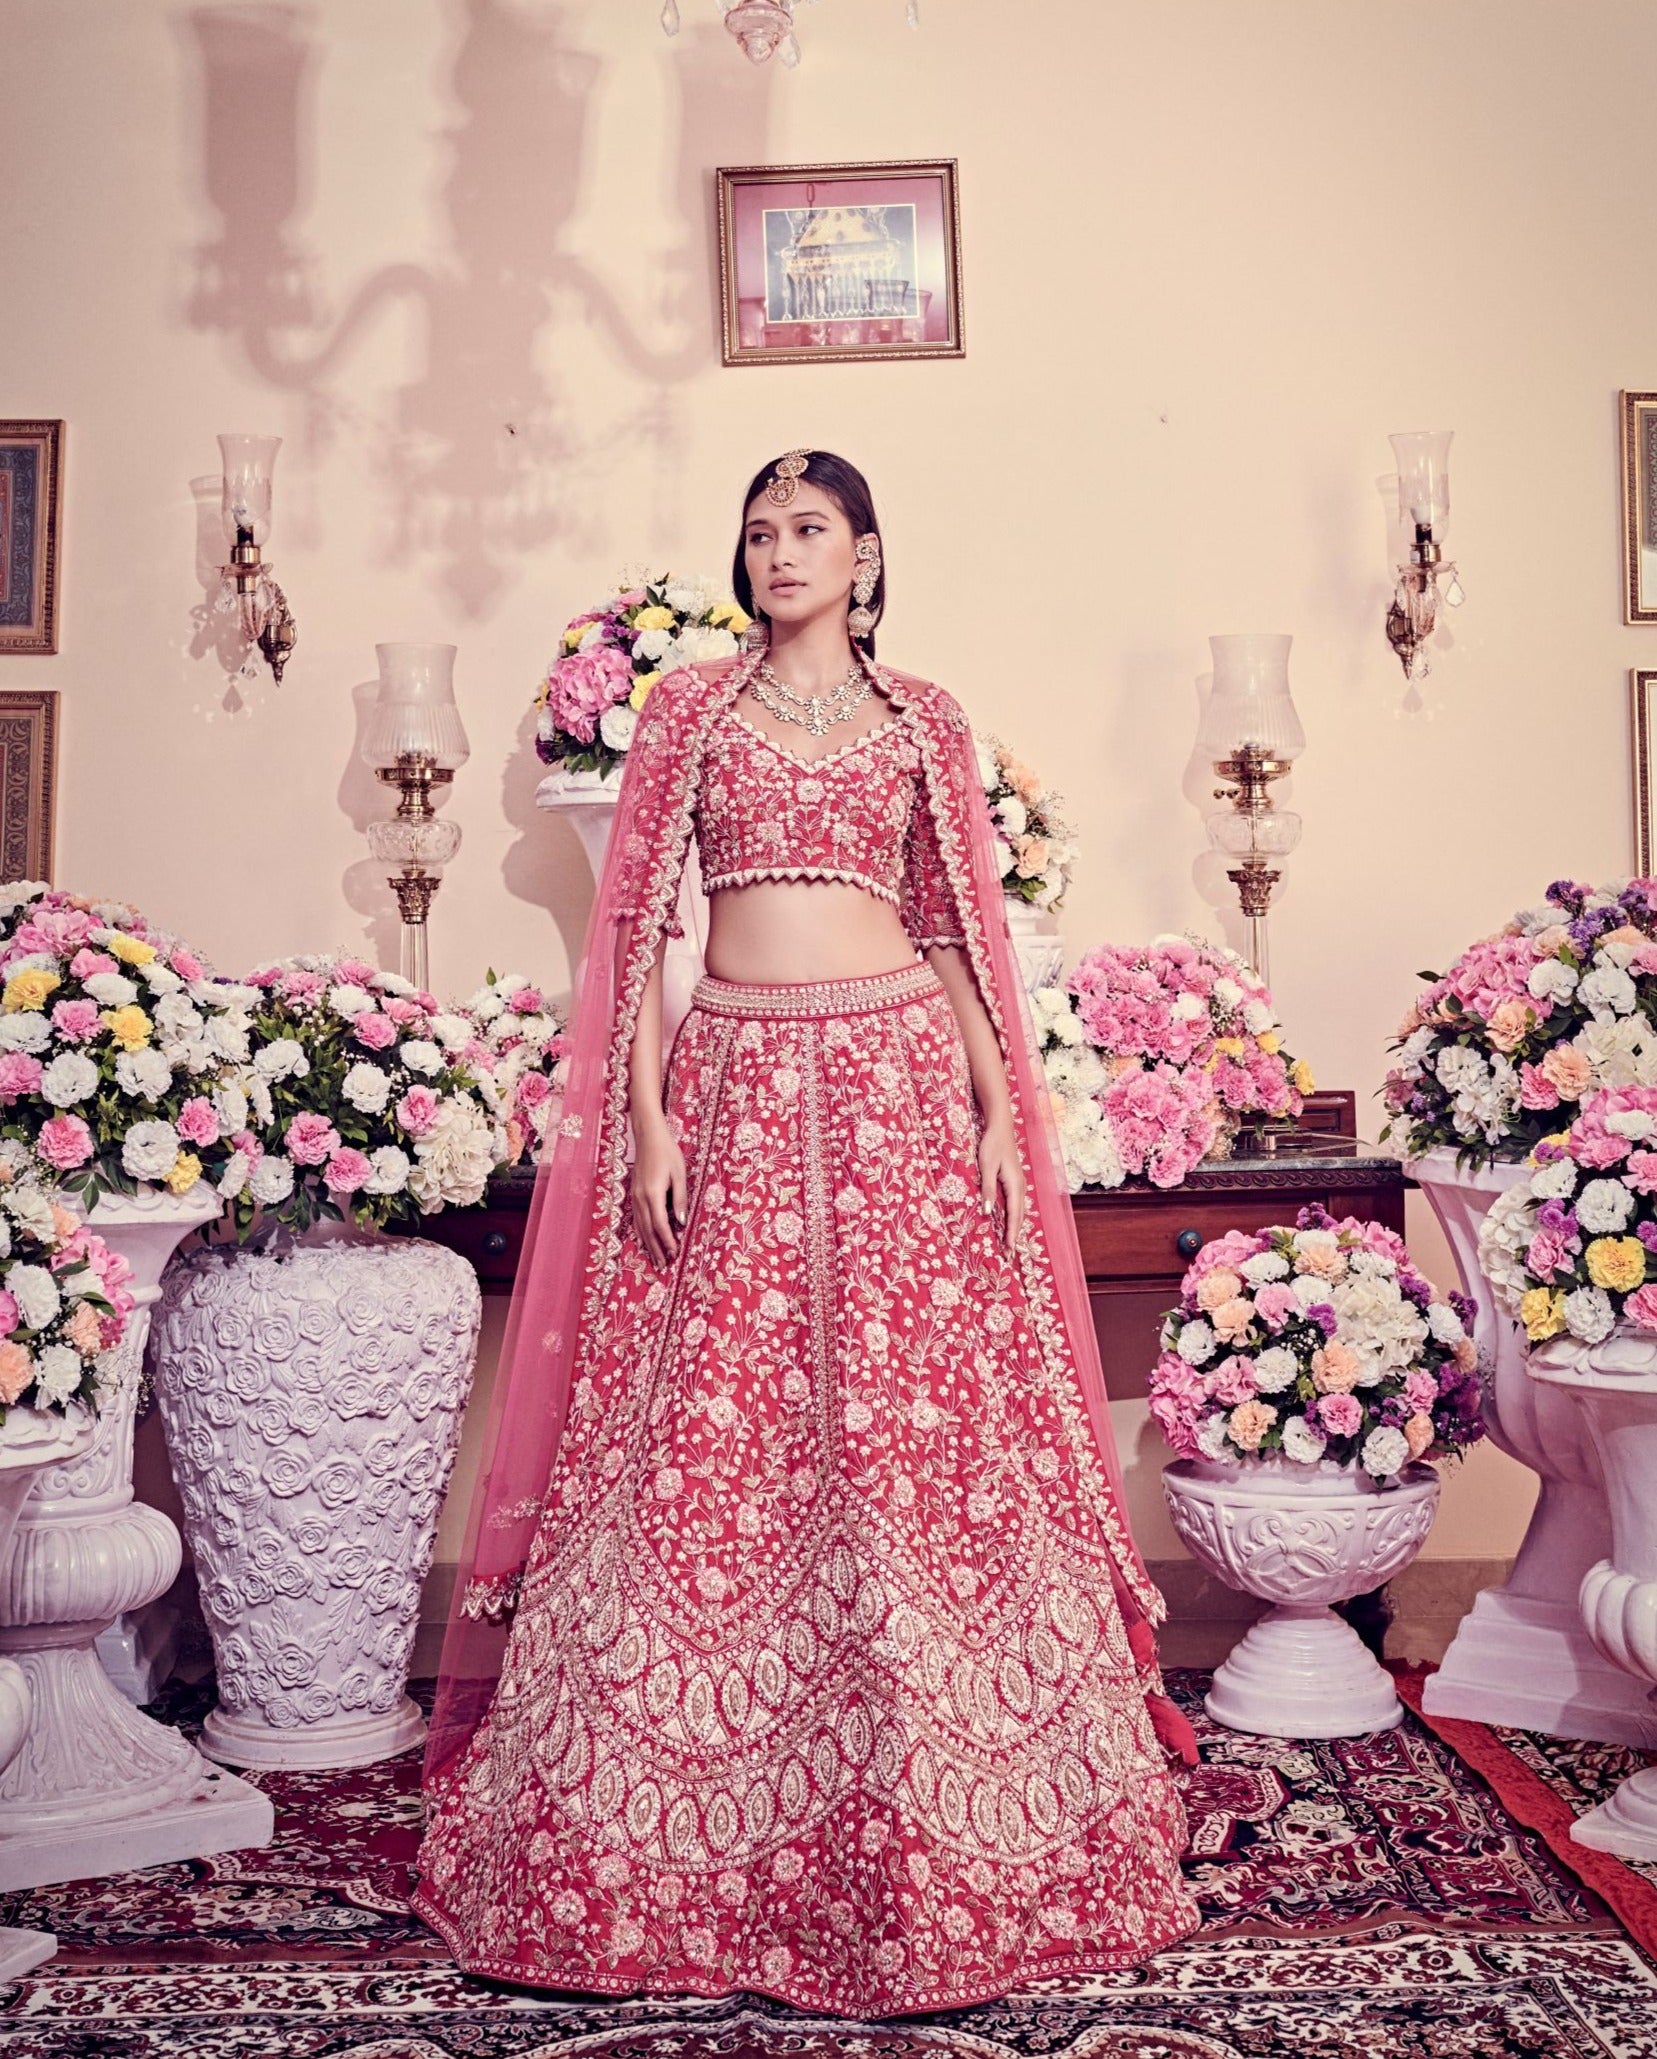 Full Pics: Alia Bhatt's Bridal Lehenga in 'Rocky Rani'